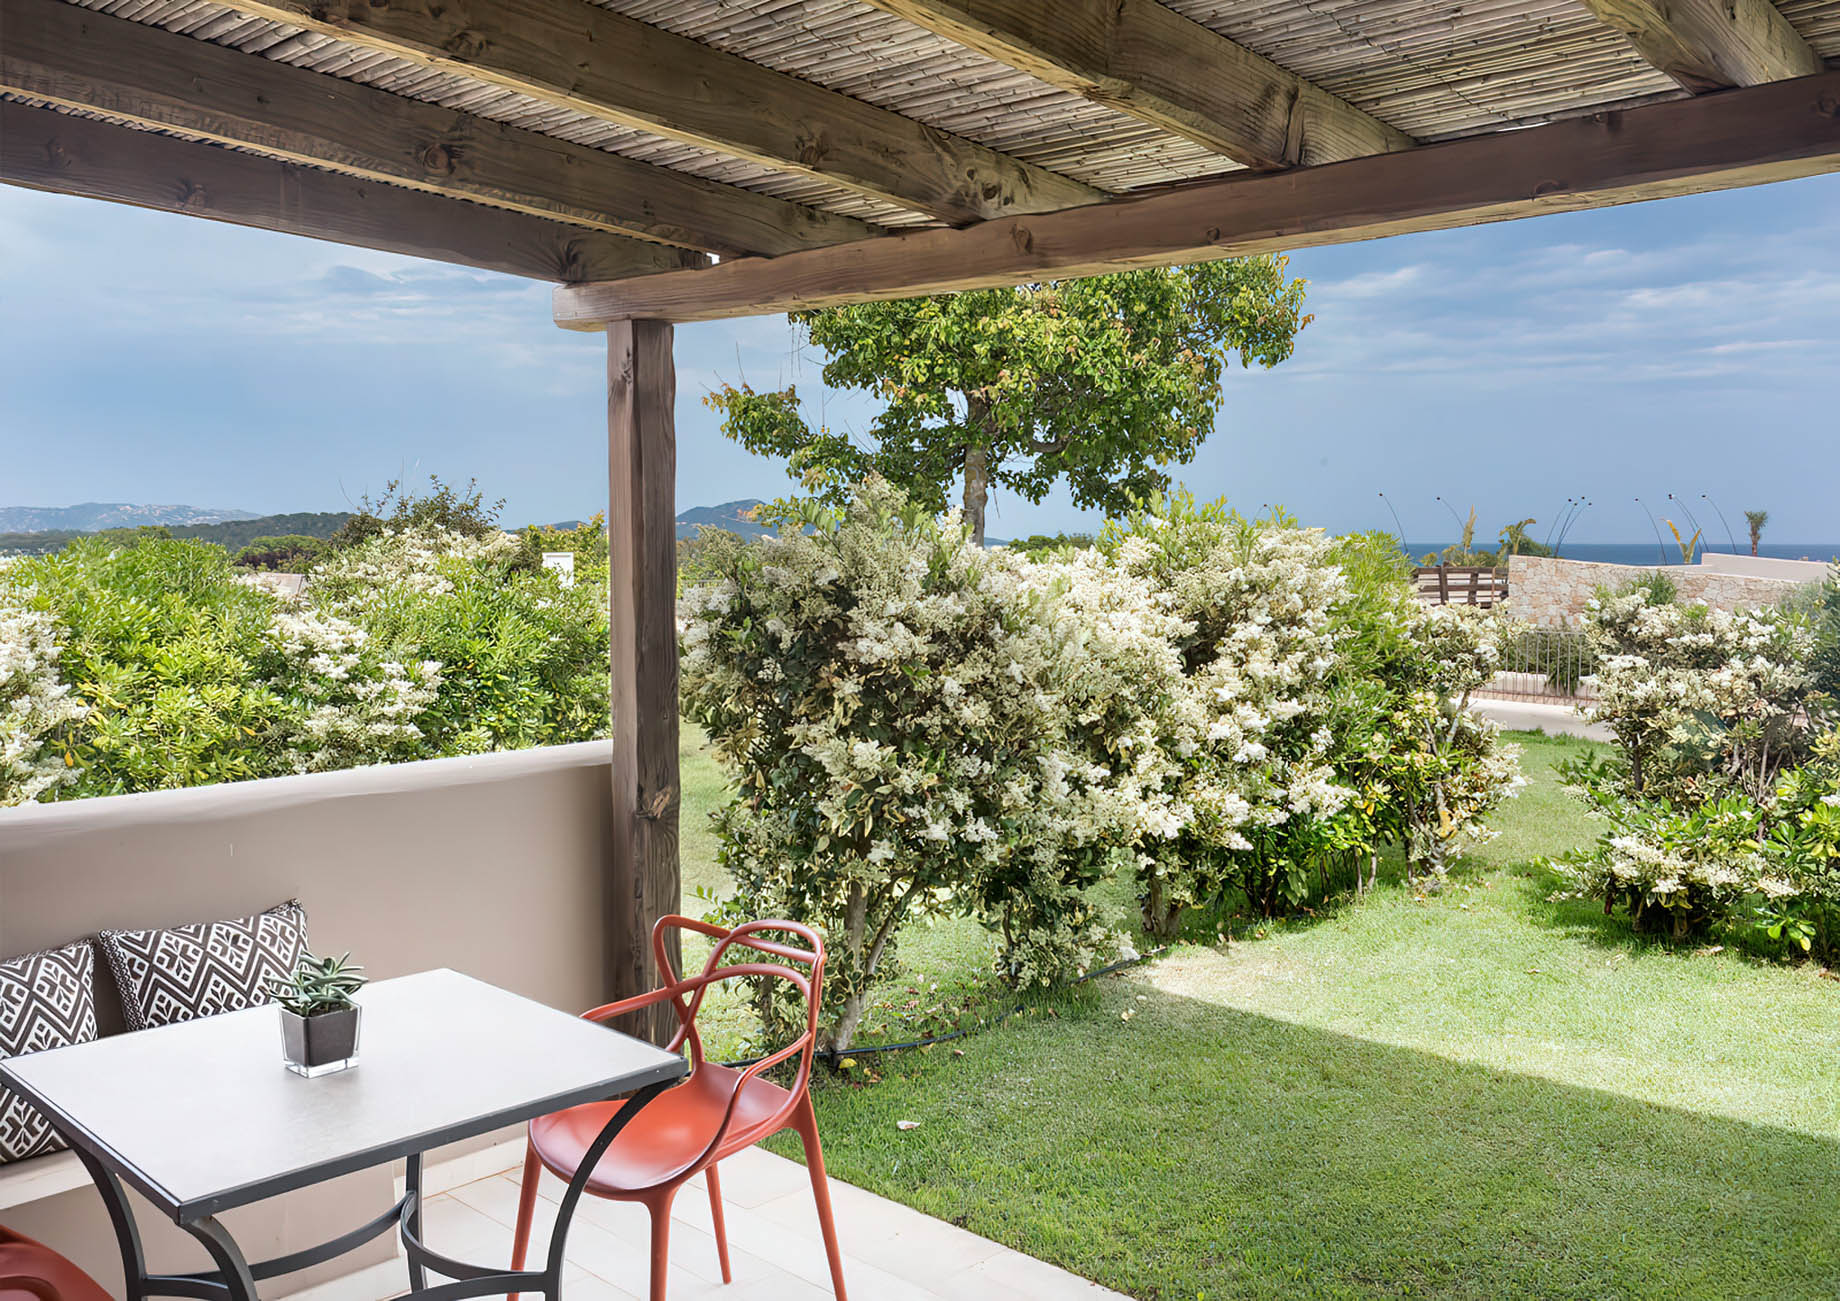 Baglioni Resort Sardinia – San Teodoro, Sardegna, Italy – Grand Deluxe Sea View Room Deck